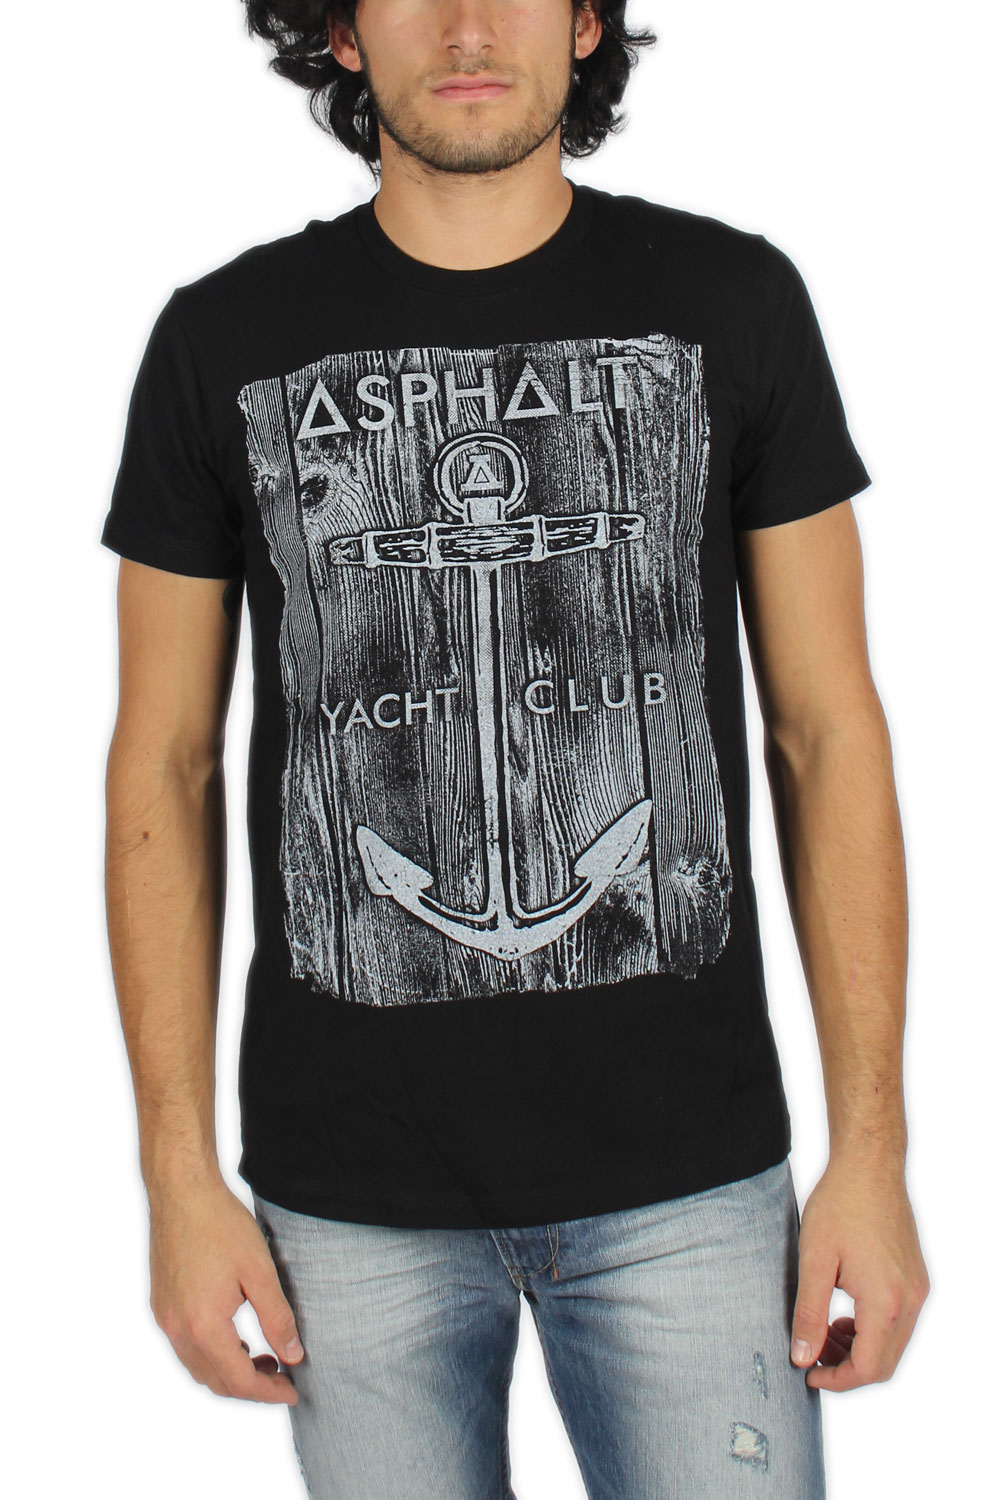 Asphalt Yacht Club - Mens Anchor Wood T-Shirt